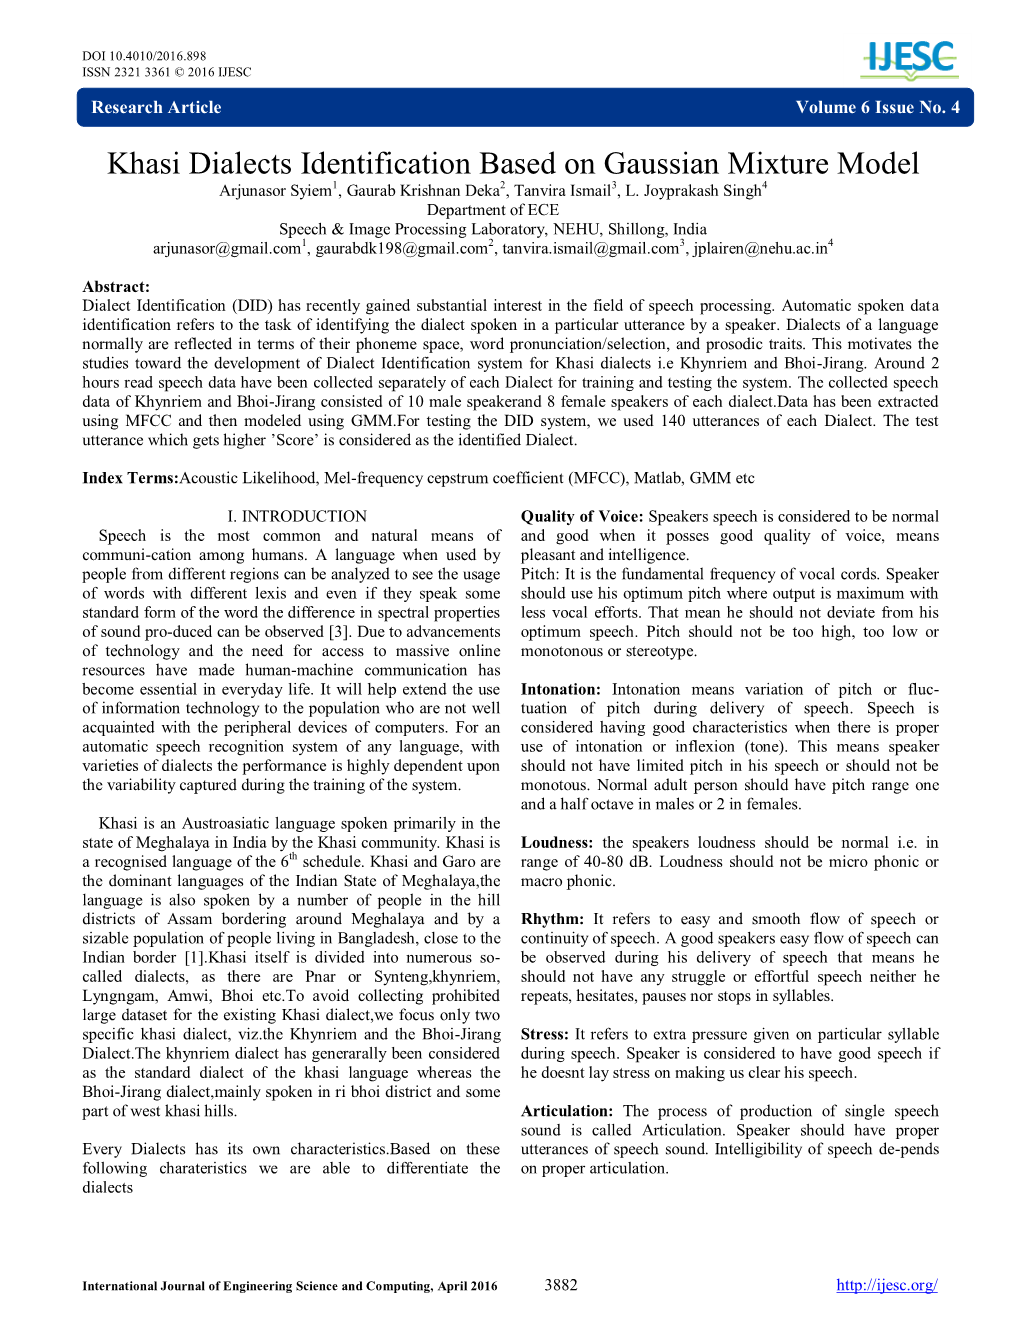 Khasi Dialects Identification Based on Gaussian Mixture Model Arjunasor Syiem1, Gaurab Krishnan Deka2, Tanvira Ismail3, L